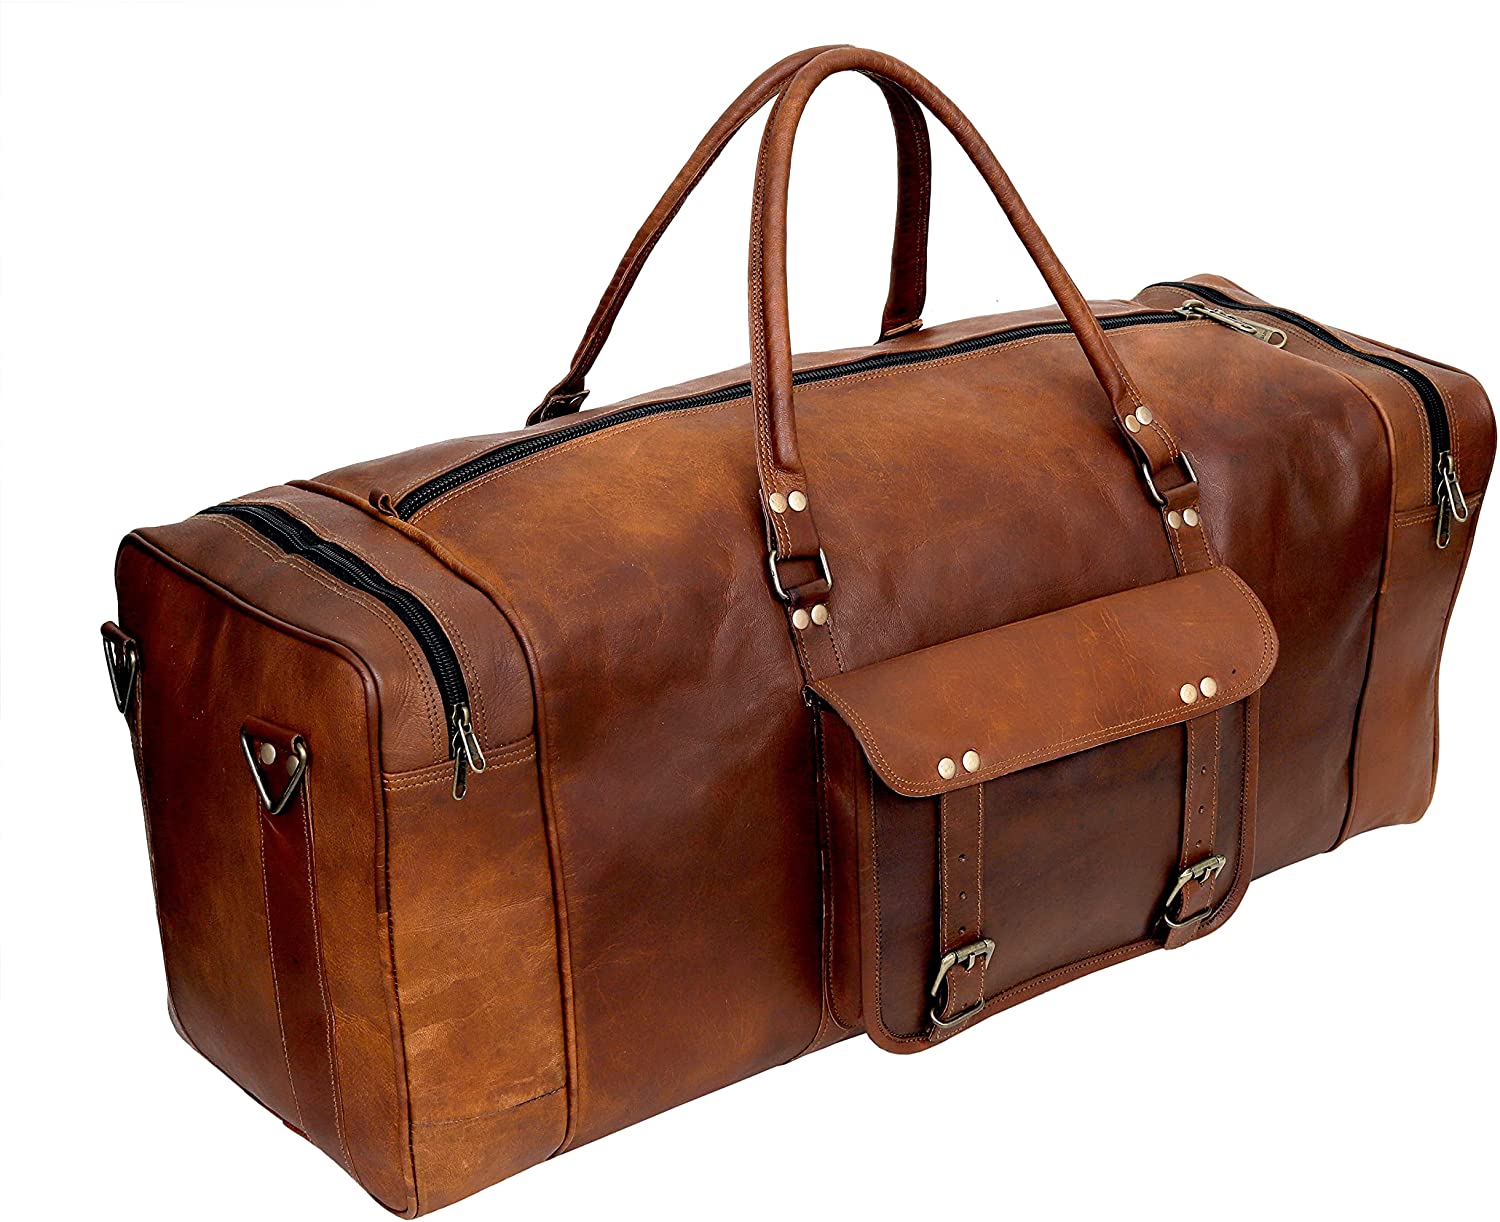 spacious brown leather duffle bag